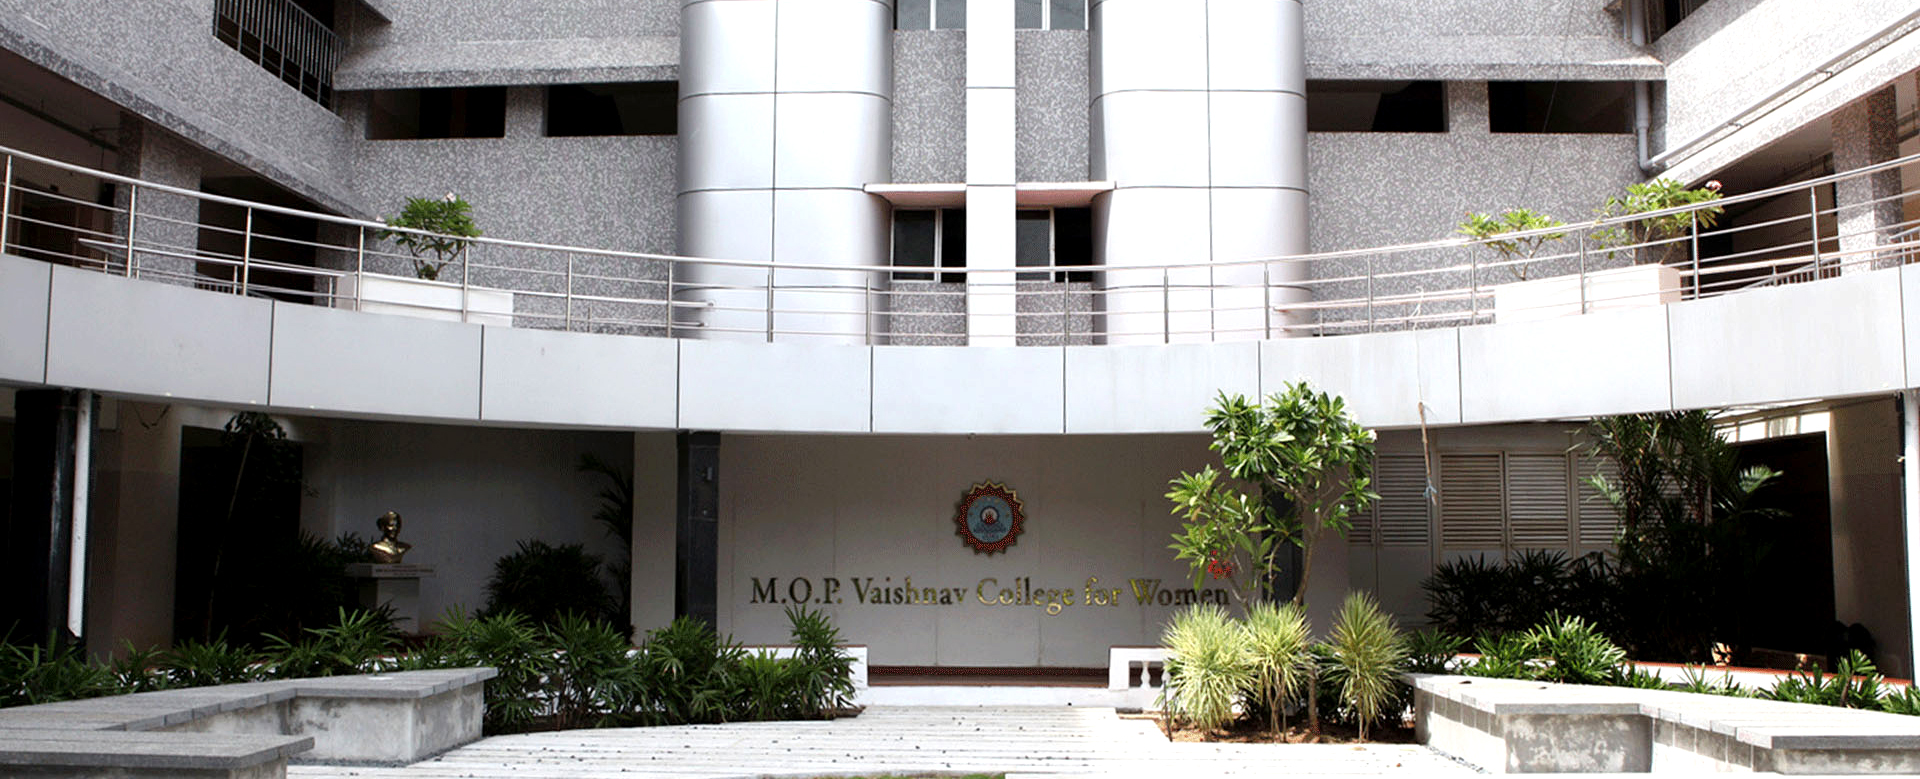 M.O.P. Vaishnav College for Women